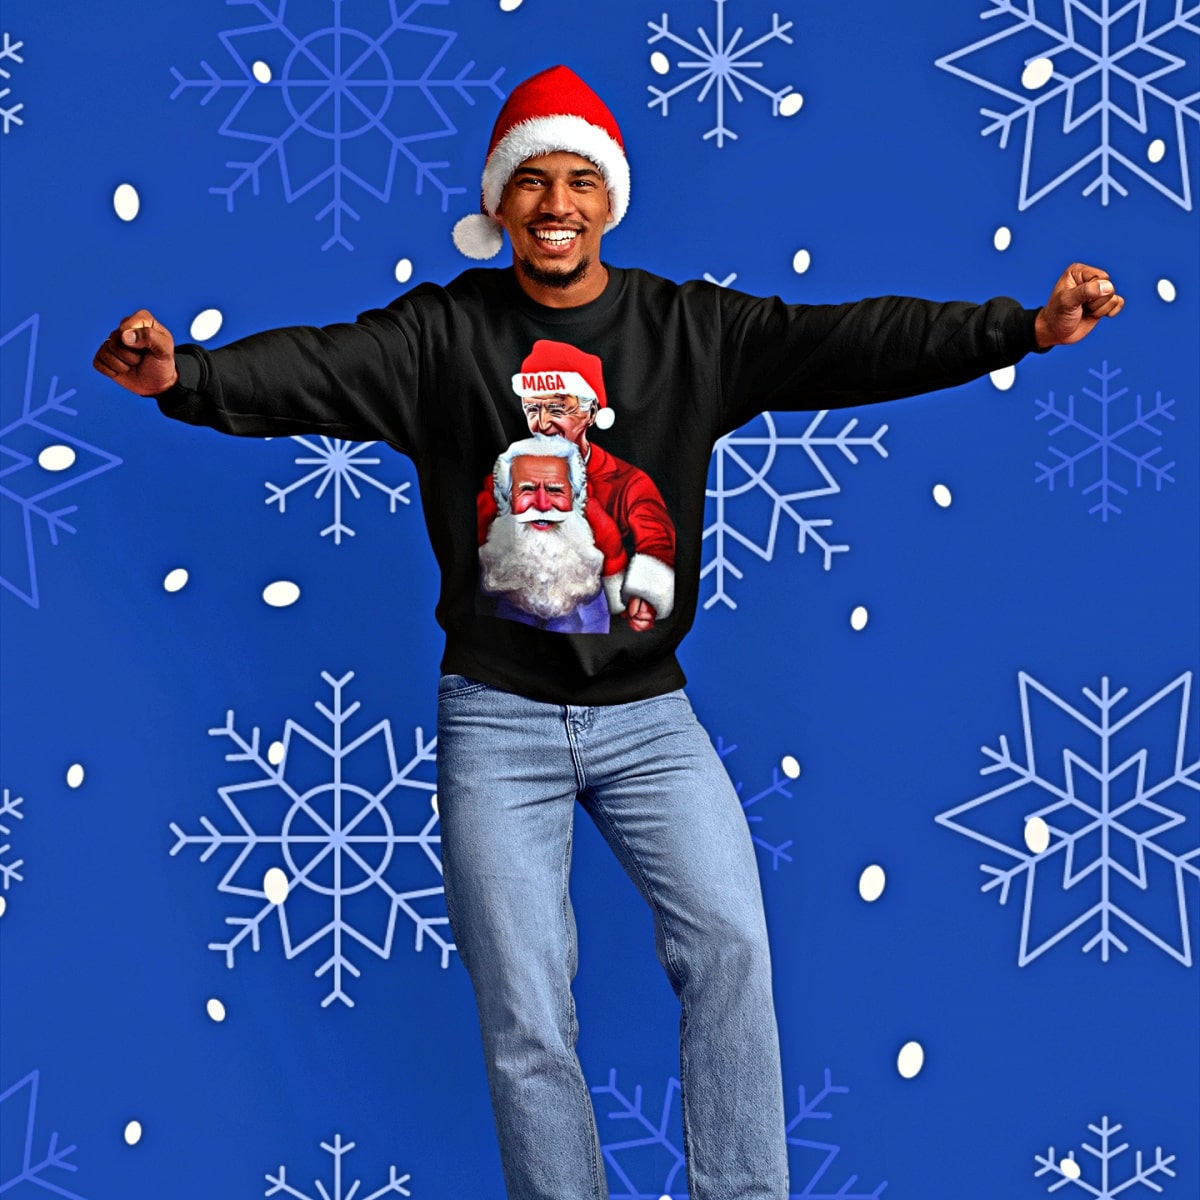 MAGA Santa Joe Biden Funny Christmas Sweater - Santaland